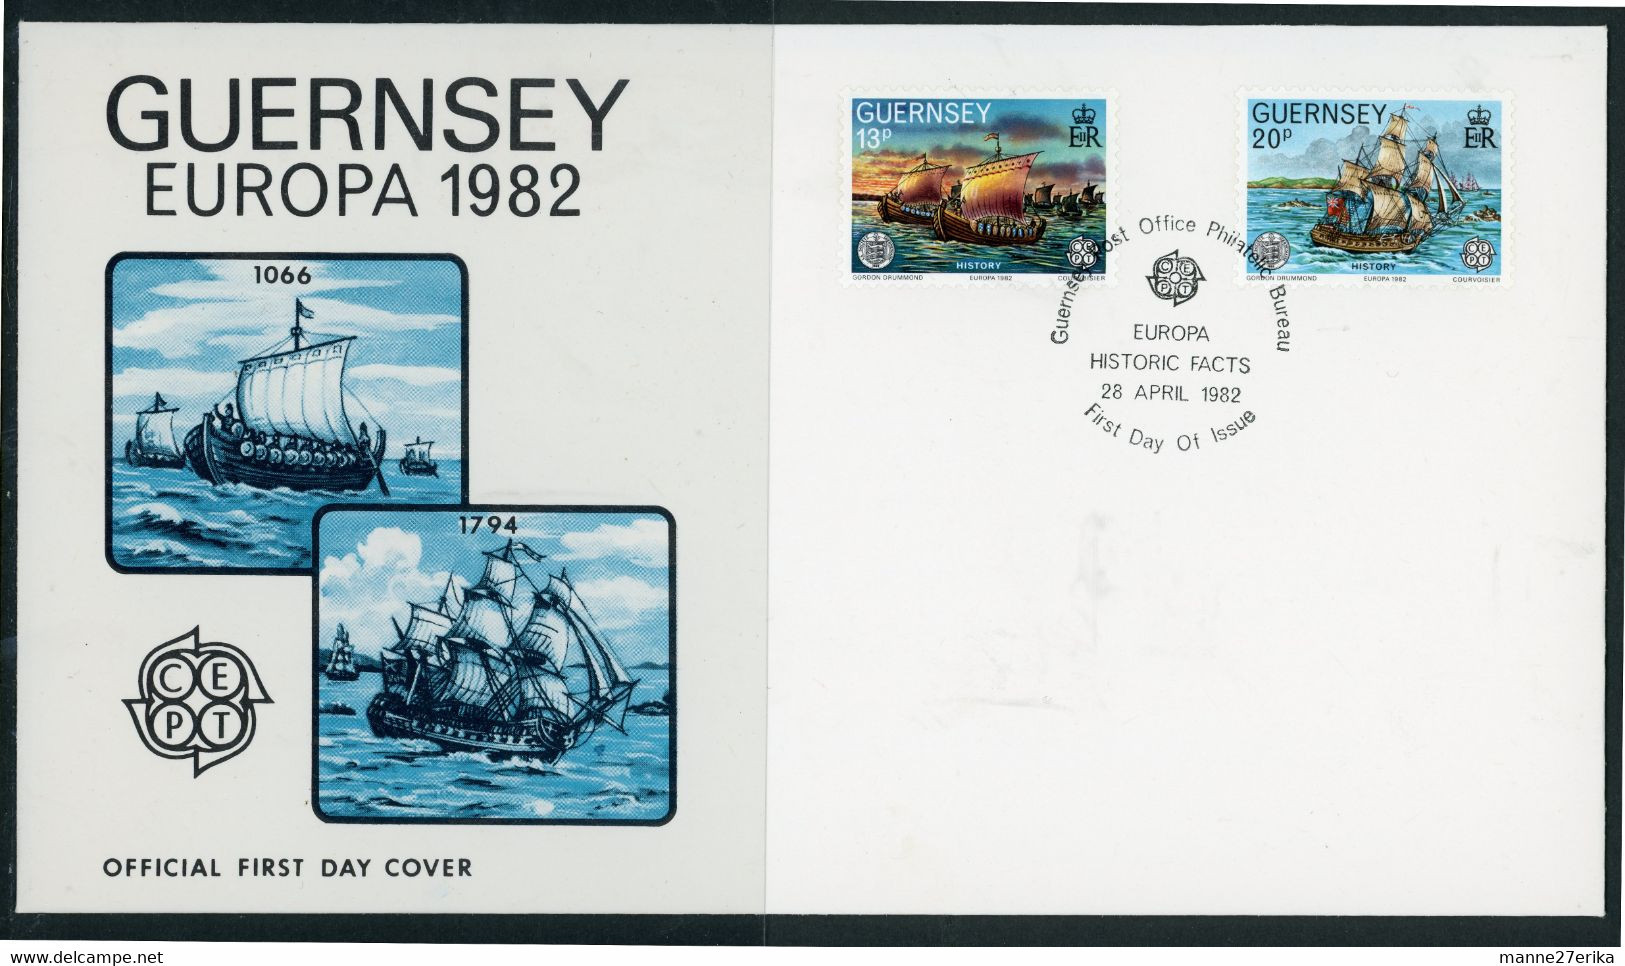 Guernsey FDC 1982 - Guernsey